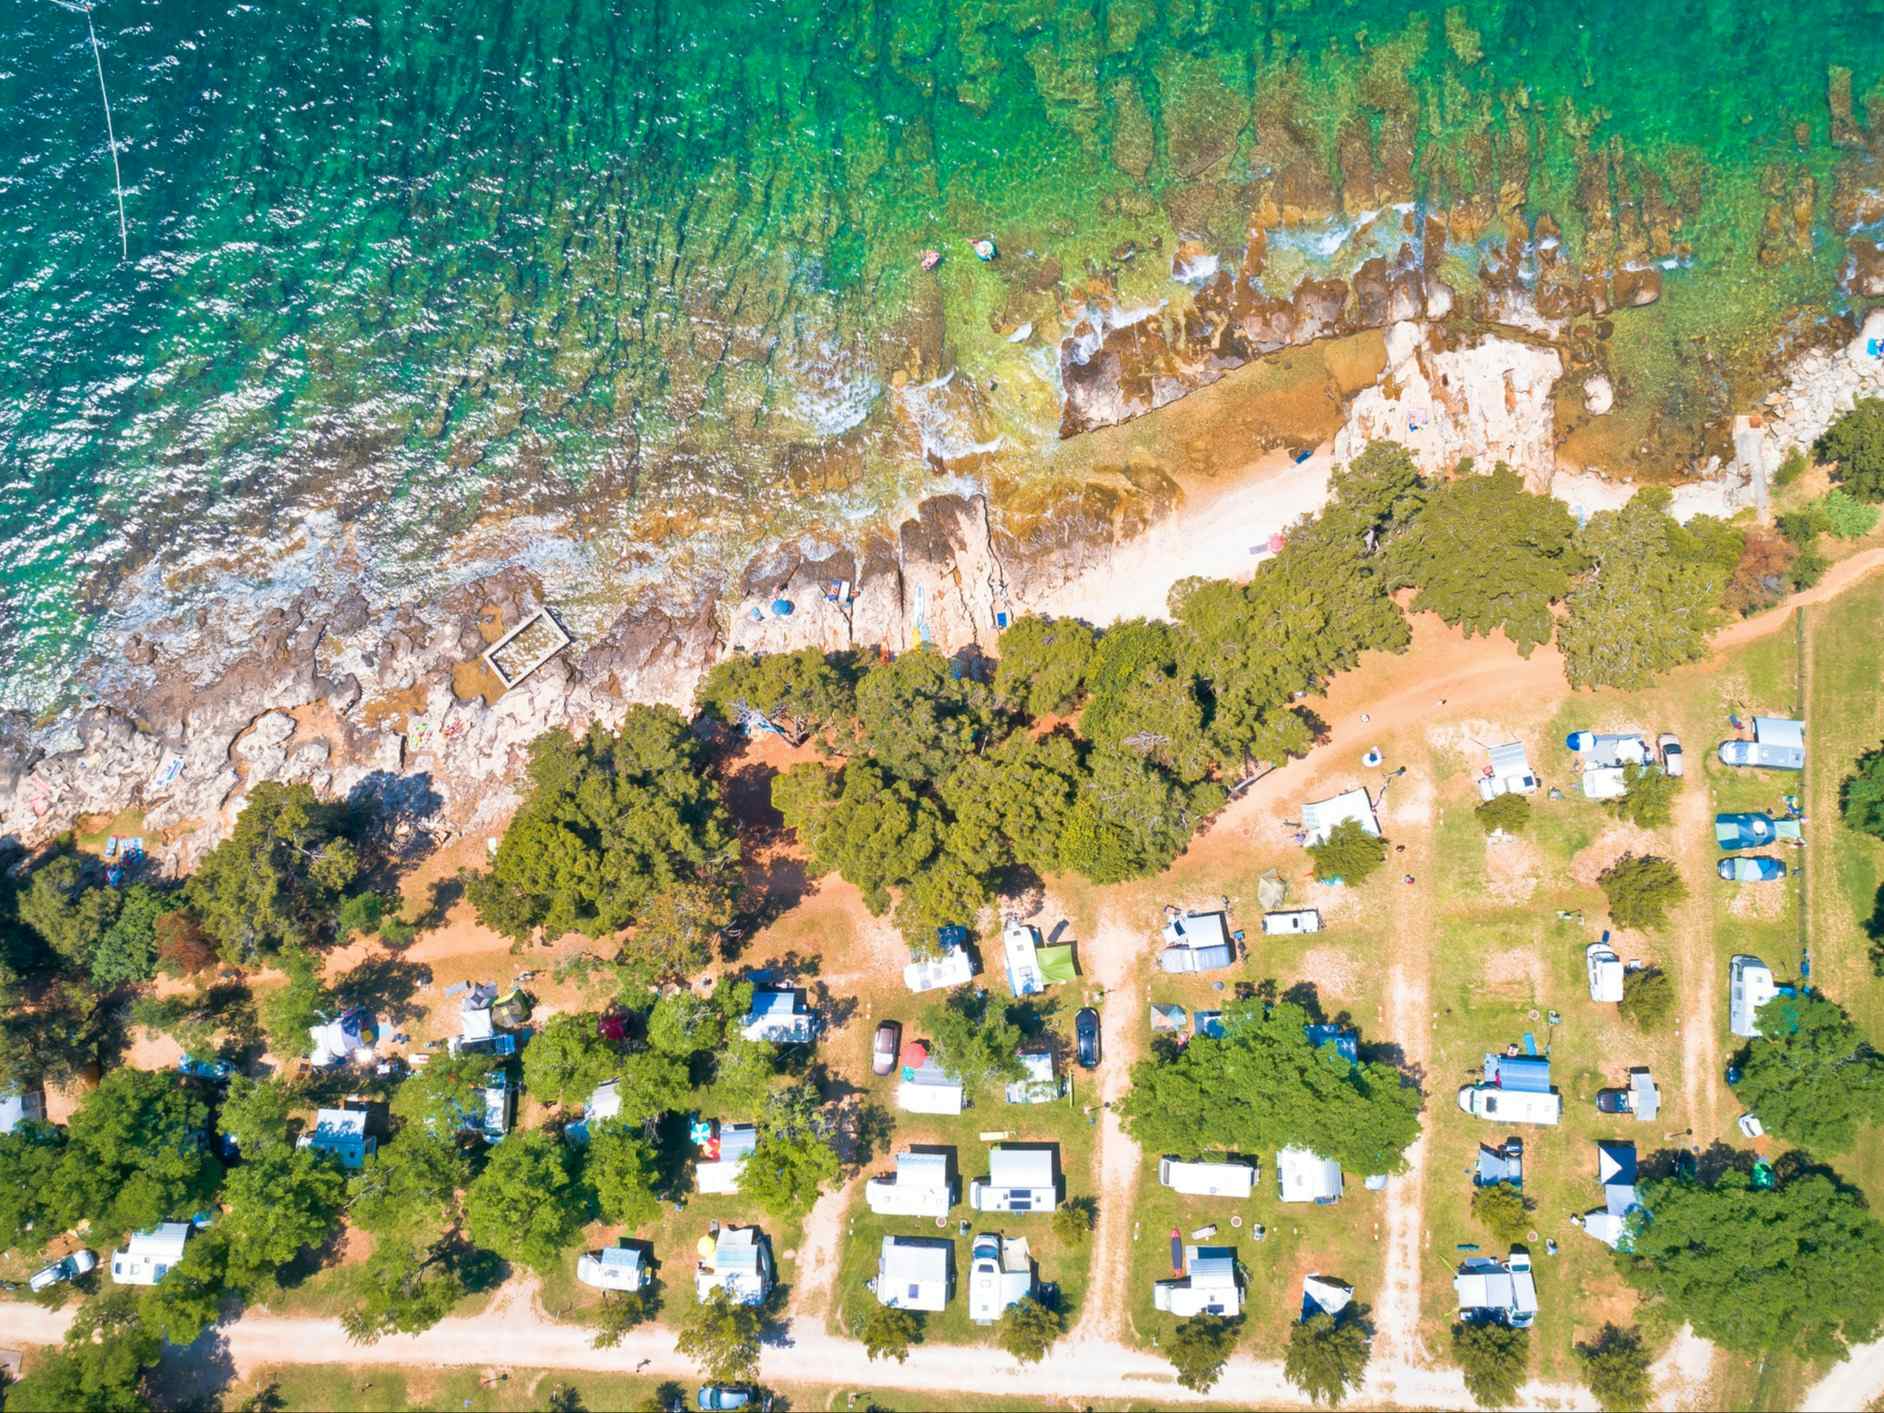 Campsite in Croatia. Photo: GettyImages-1159317328